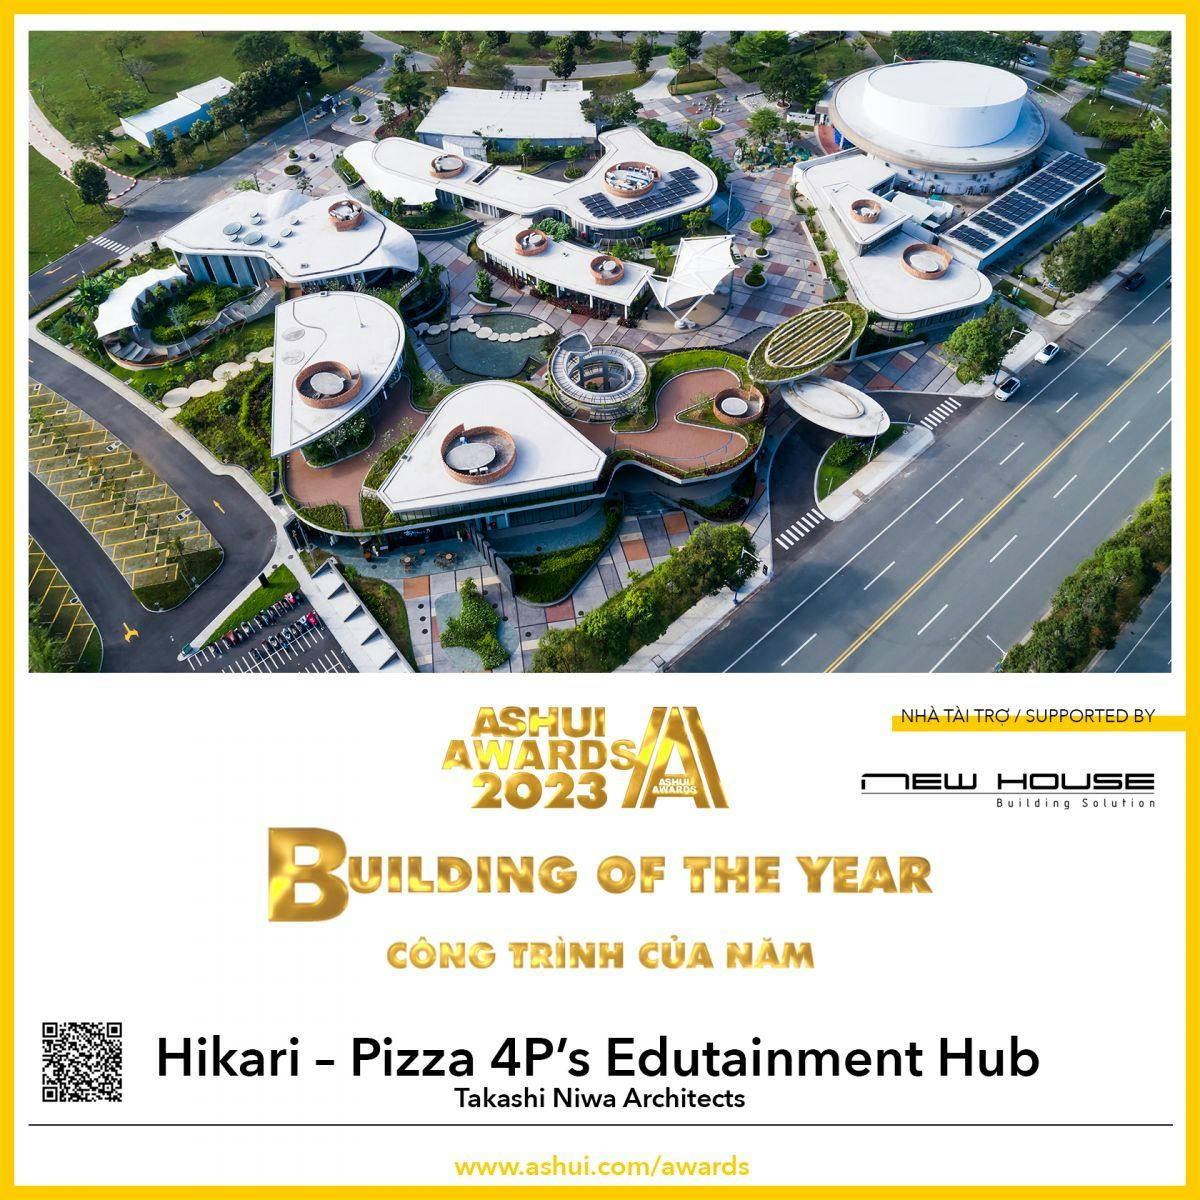 Hikari – Pizza 4P’s Edutainment Hub won Ashui Awards 2023's Architect of the Year 